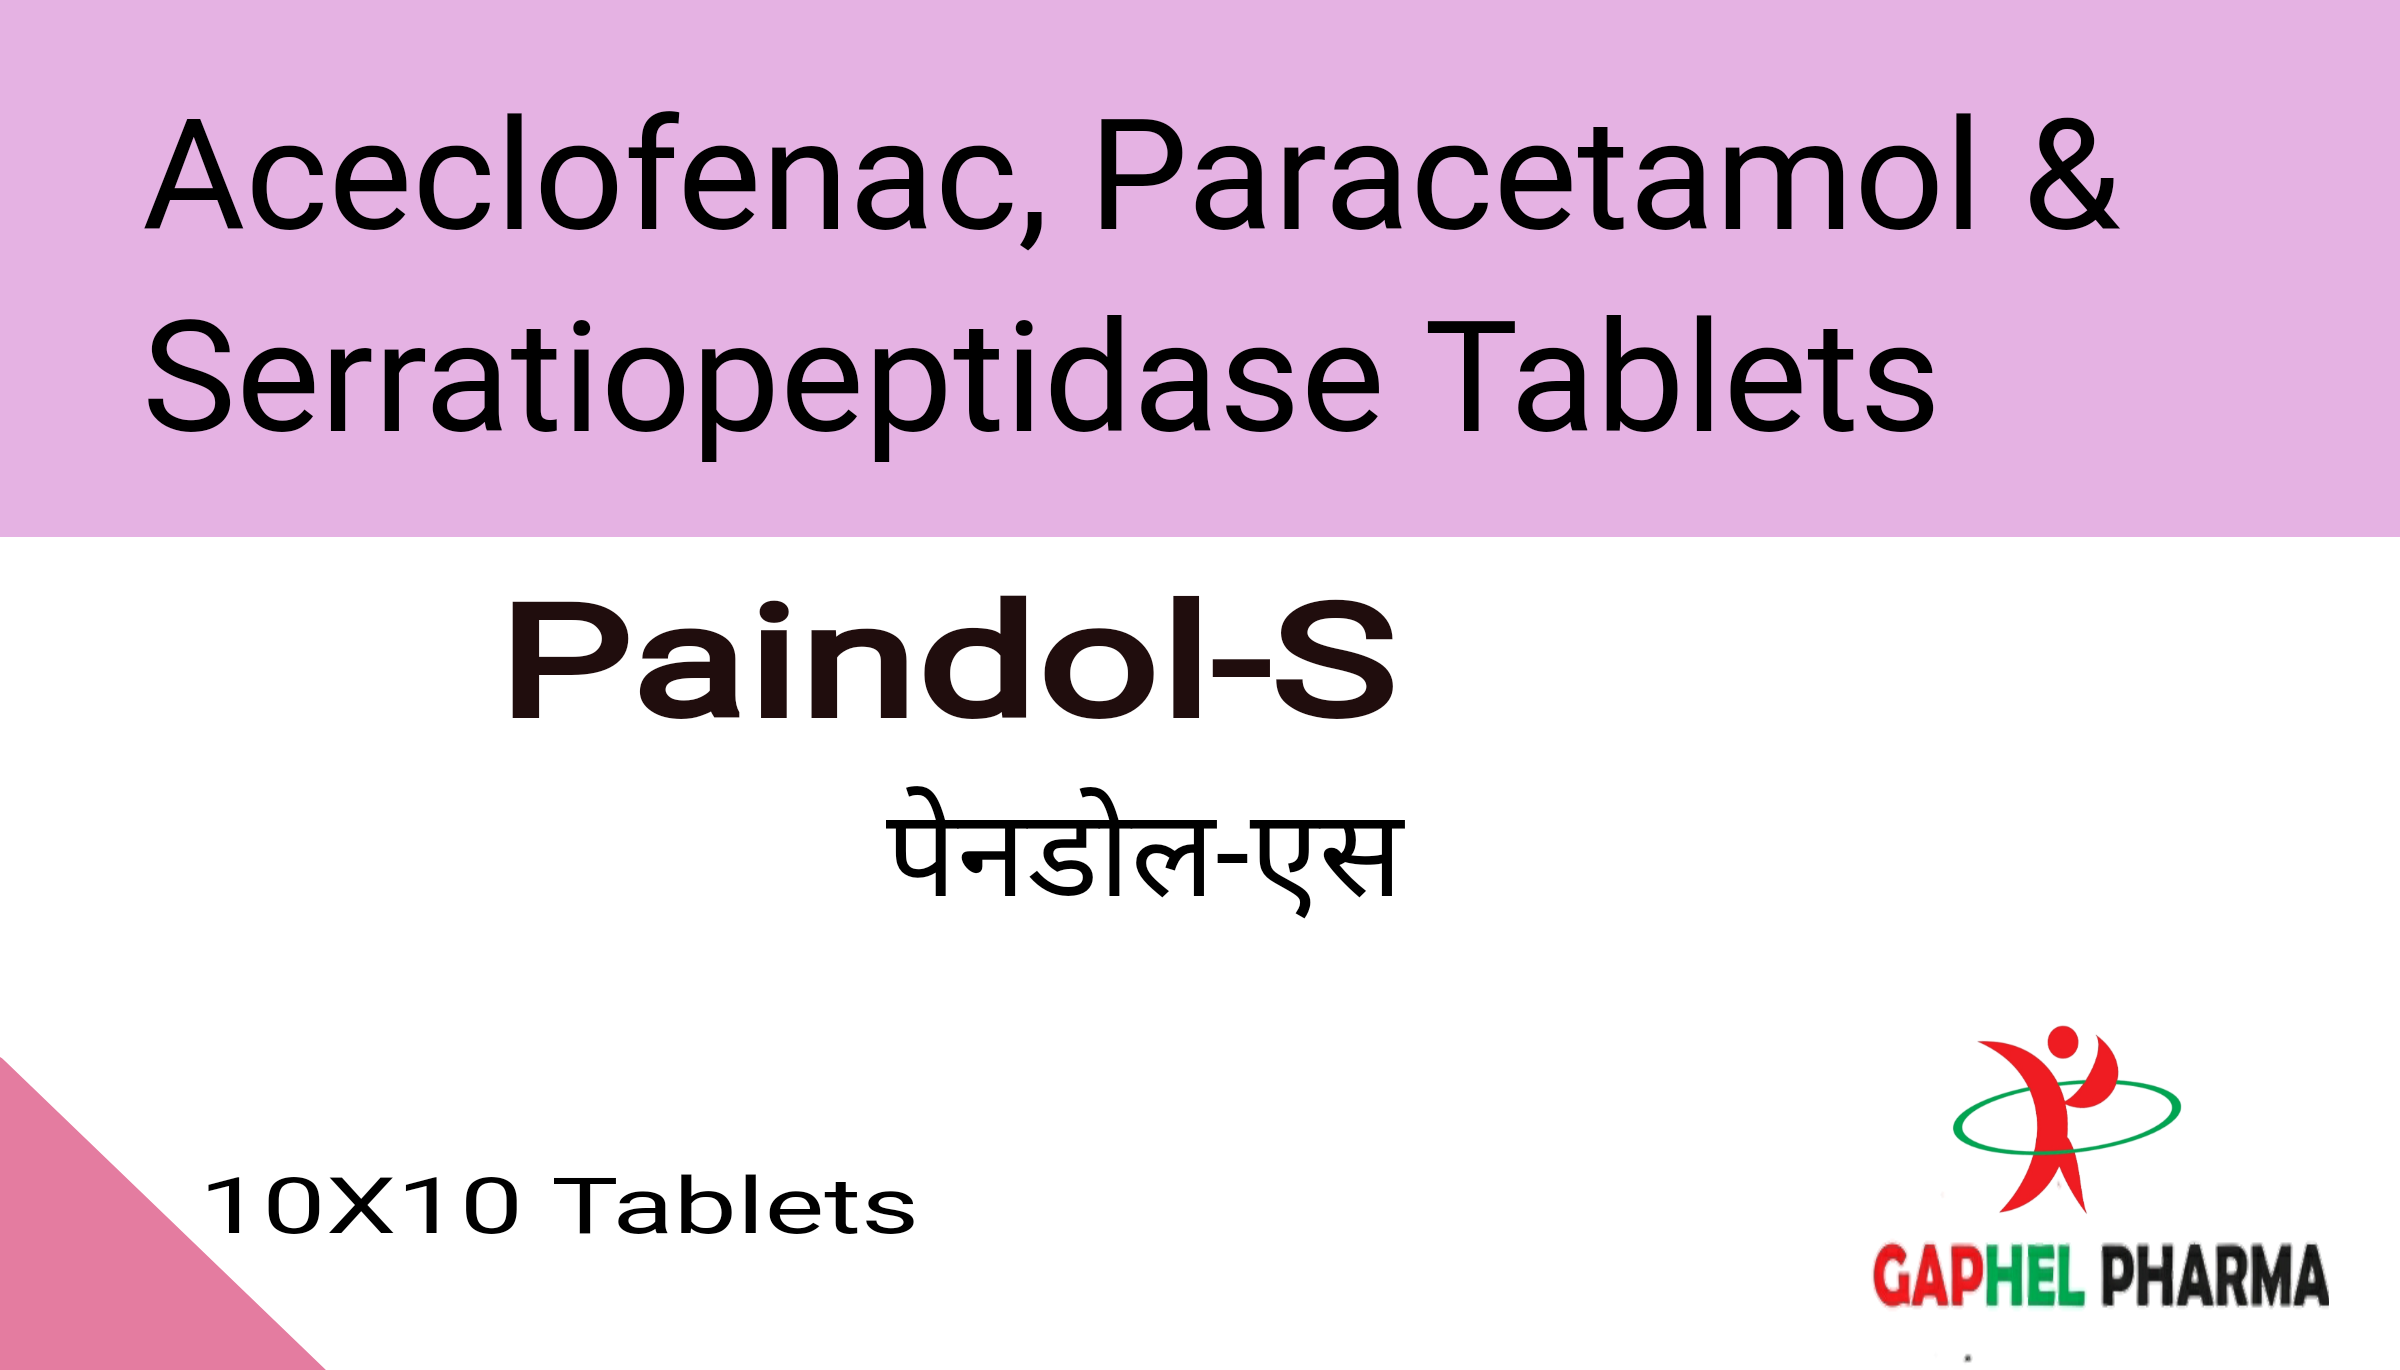 Paindol-S Tablet from GAPHEL PHARMA 